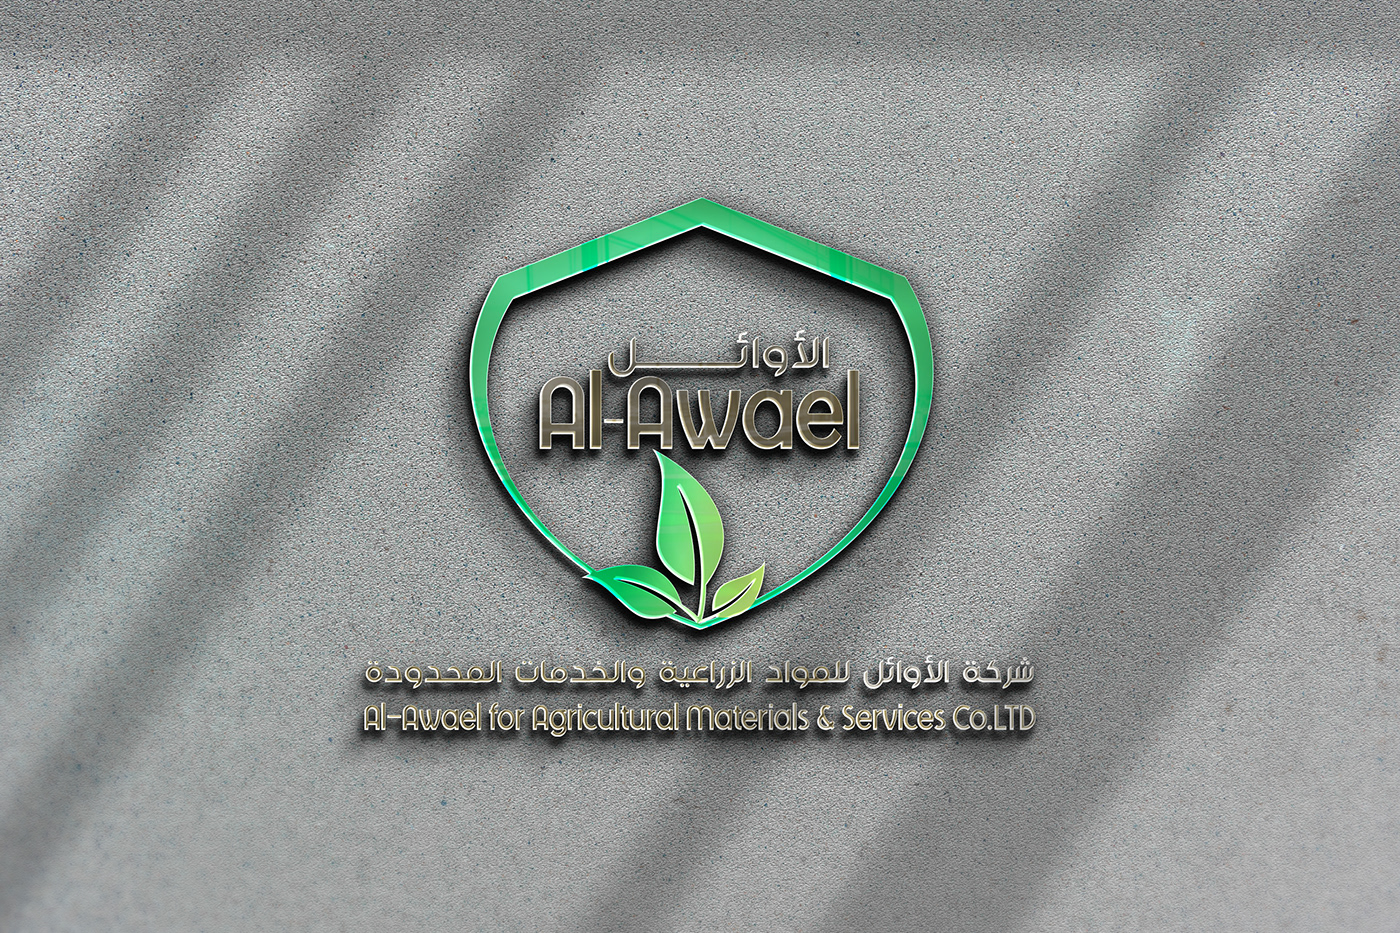 Agricultural agriculture agriculture company logo Agriculture identity agriculture logo Illustrator زراعة شركة زراعية